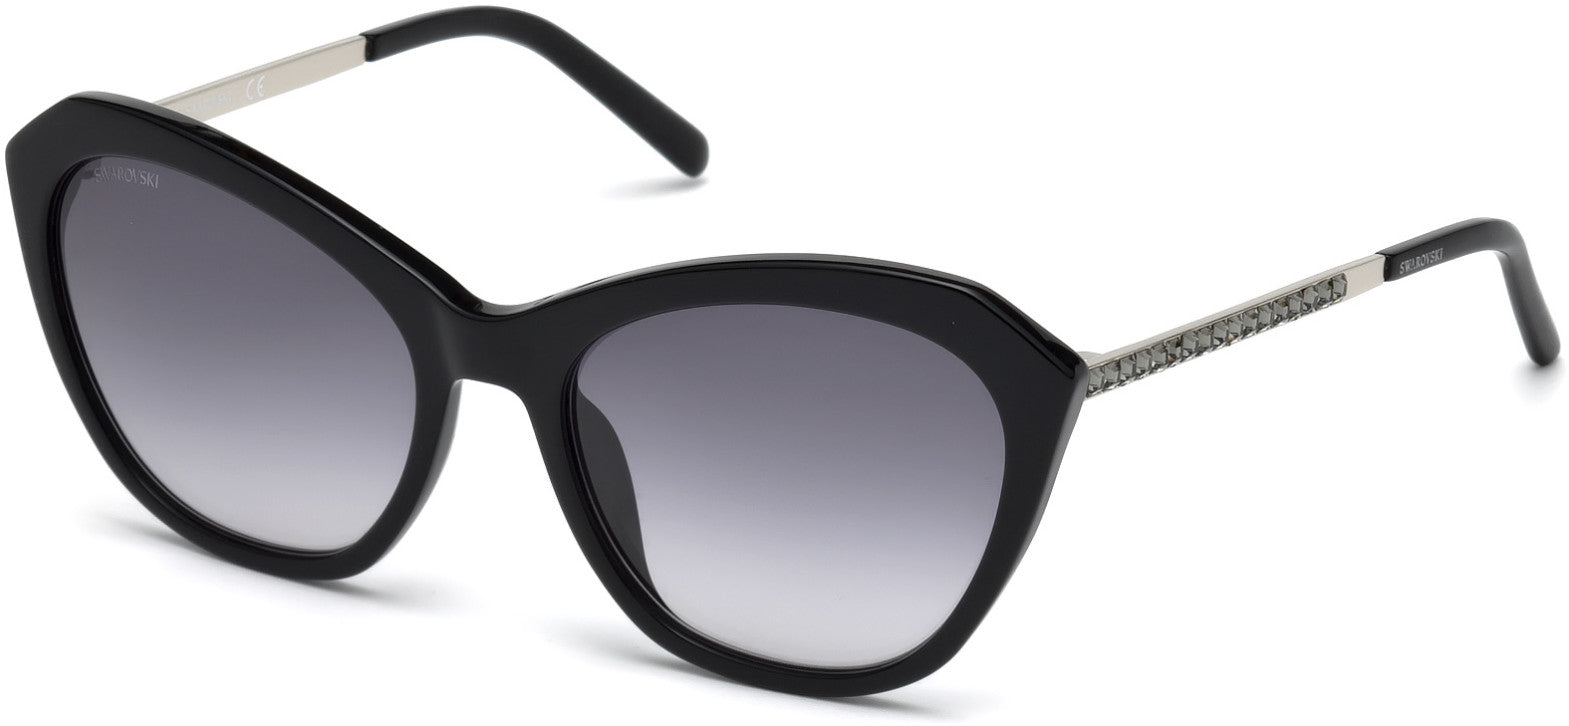 Swarovski SK0143 Cat Sunglasses 01B-01B - Shiny Black / Gradient Smoke Lenses